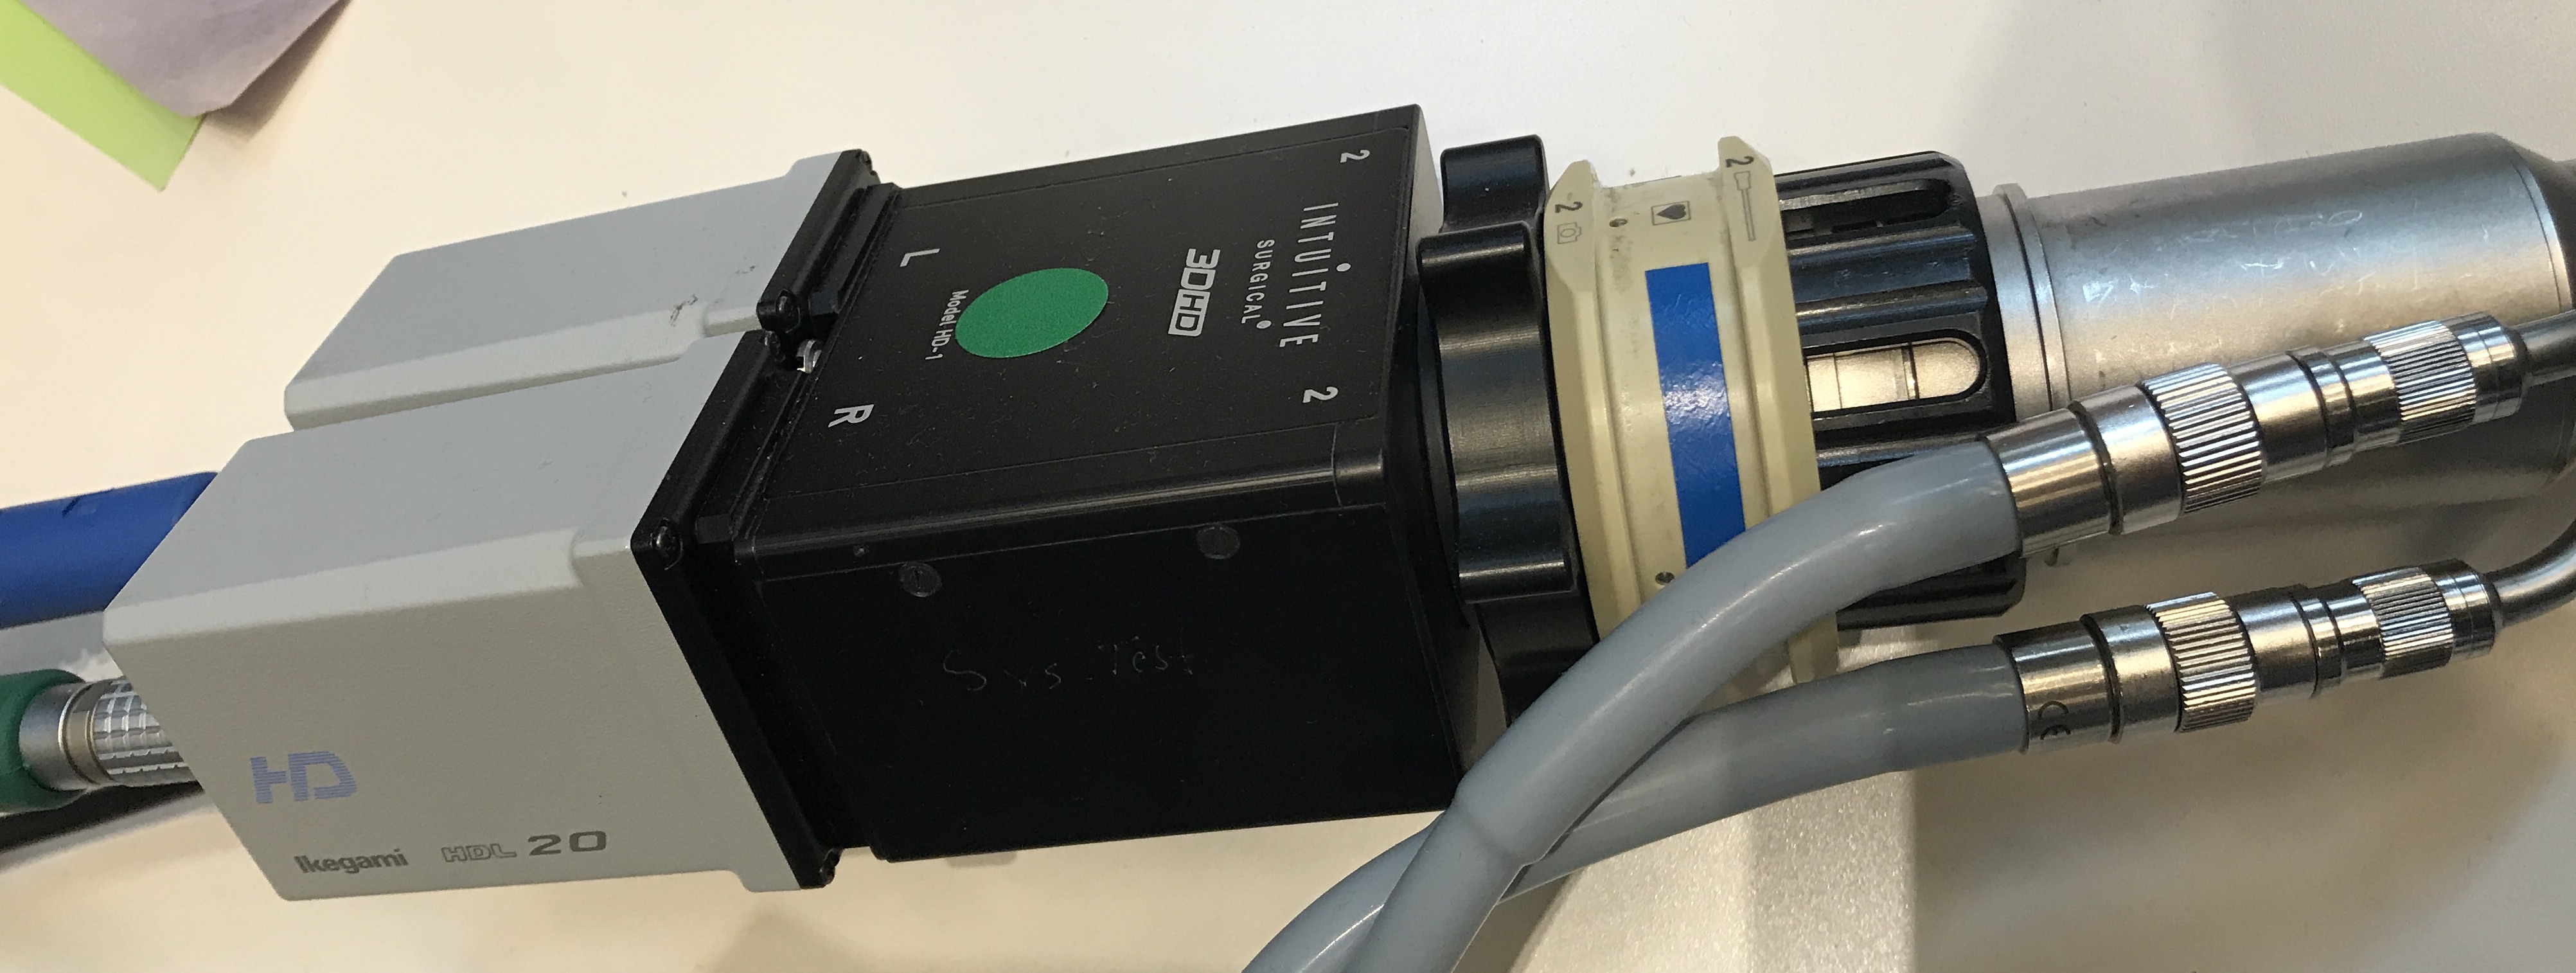 HD endoscope with Ikegami Cameras